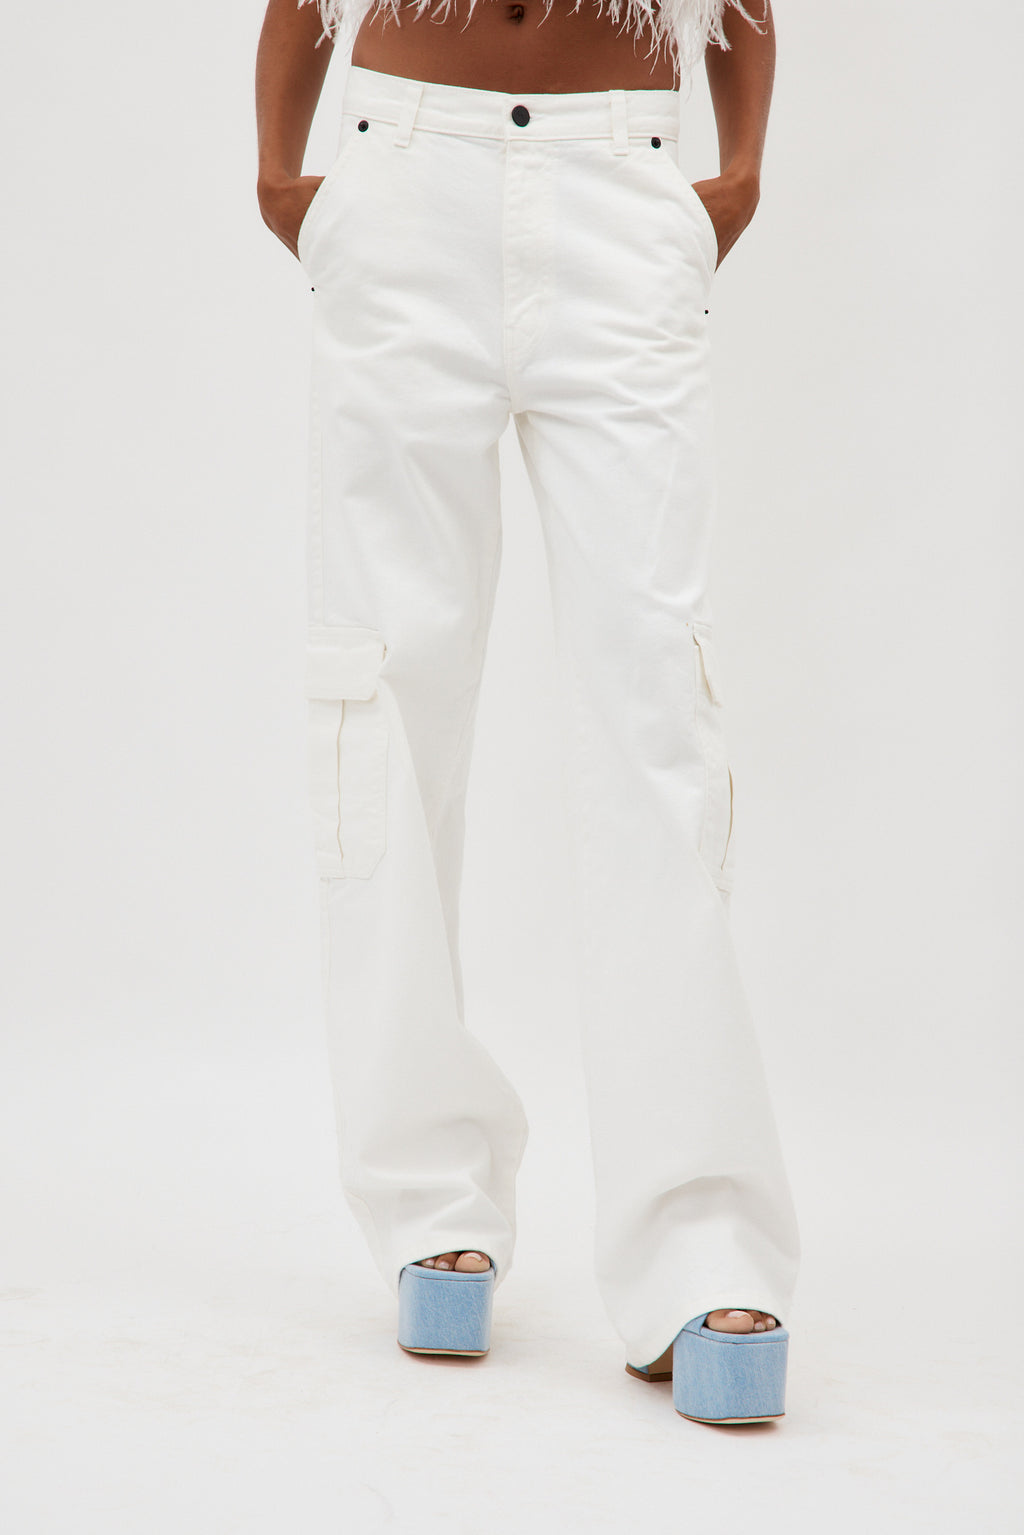 Sado White Jeans